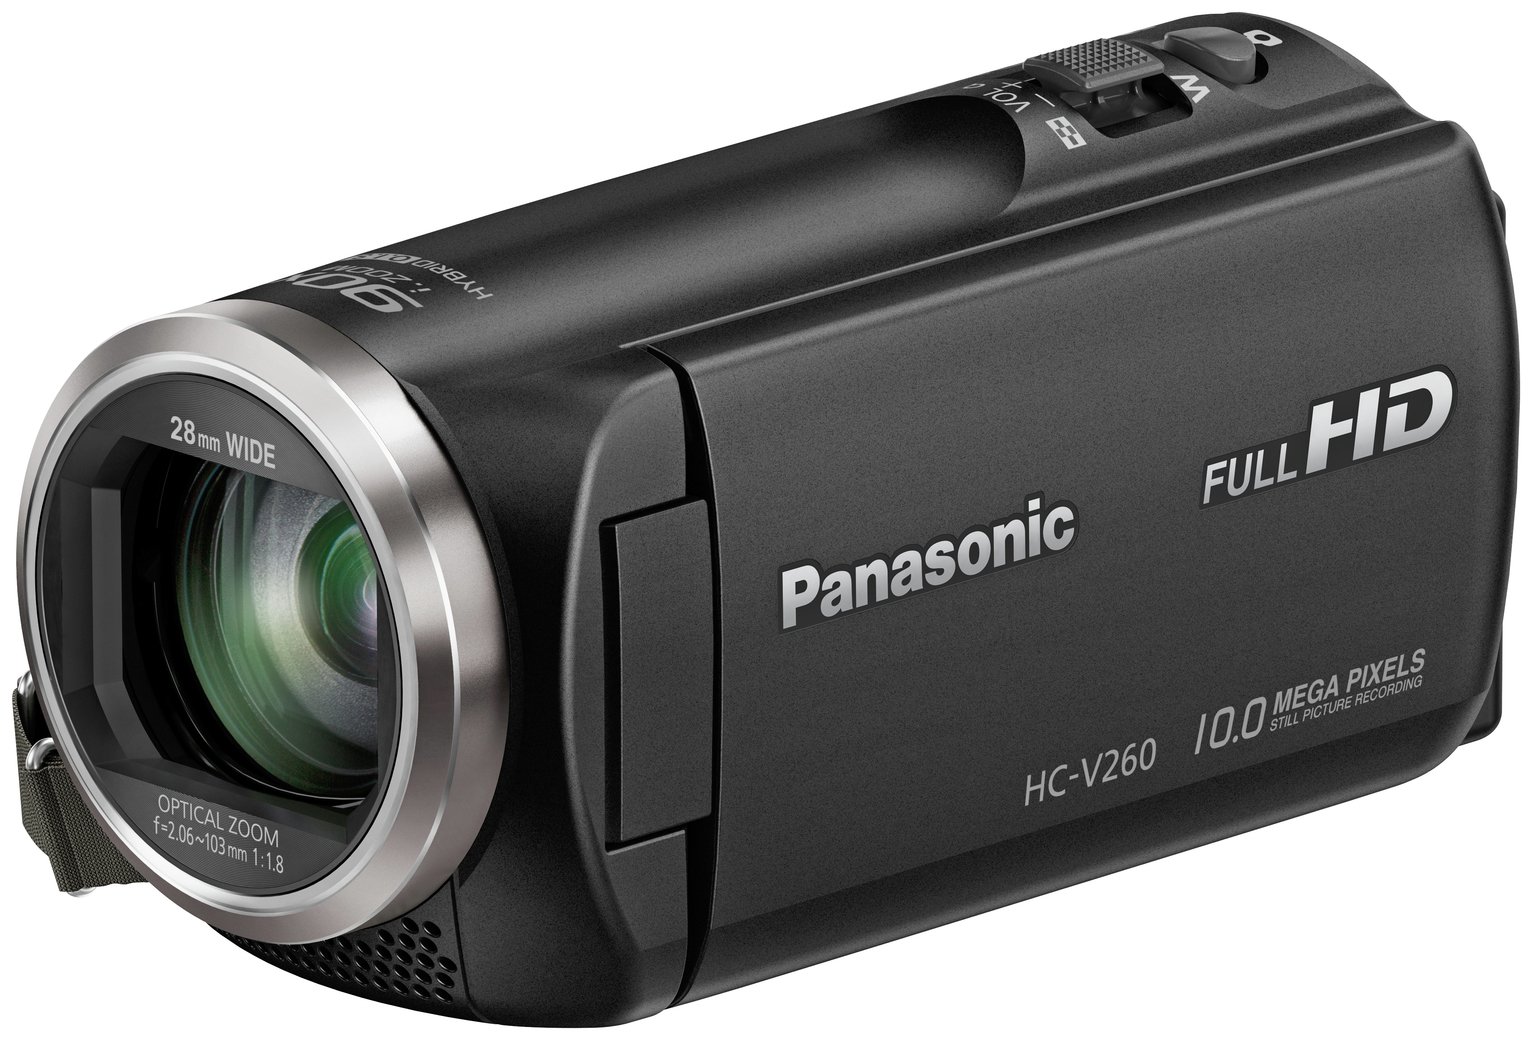 Panasonic Lumix V260 Full HD Camcorder - Black